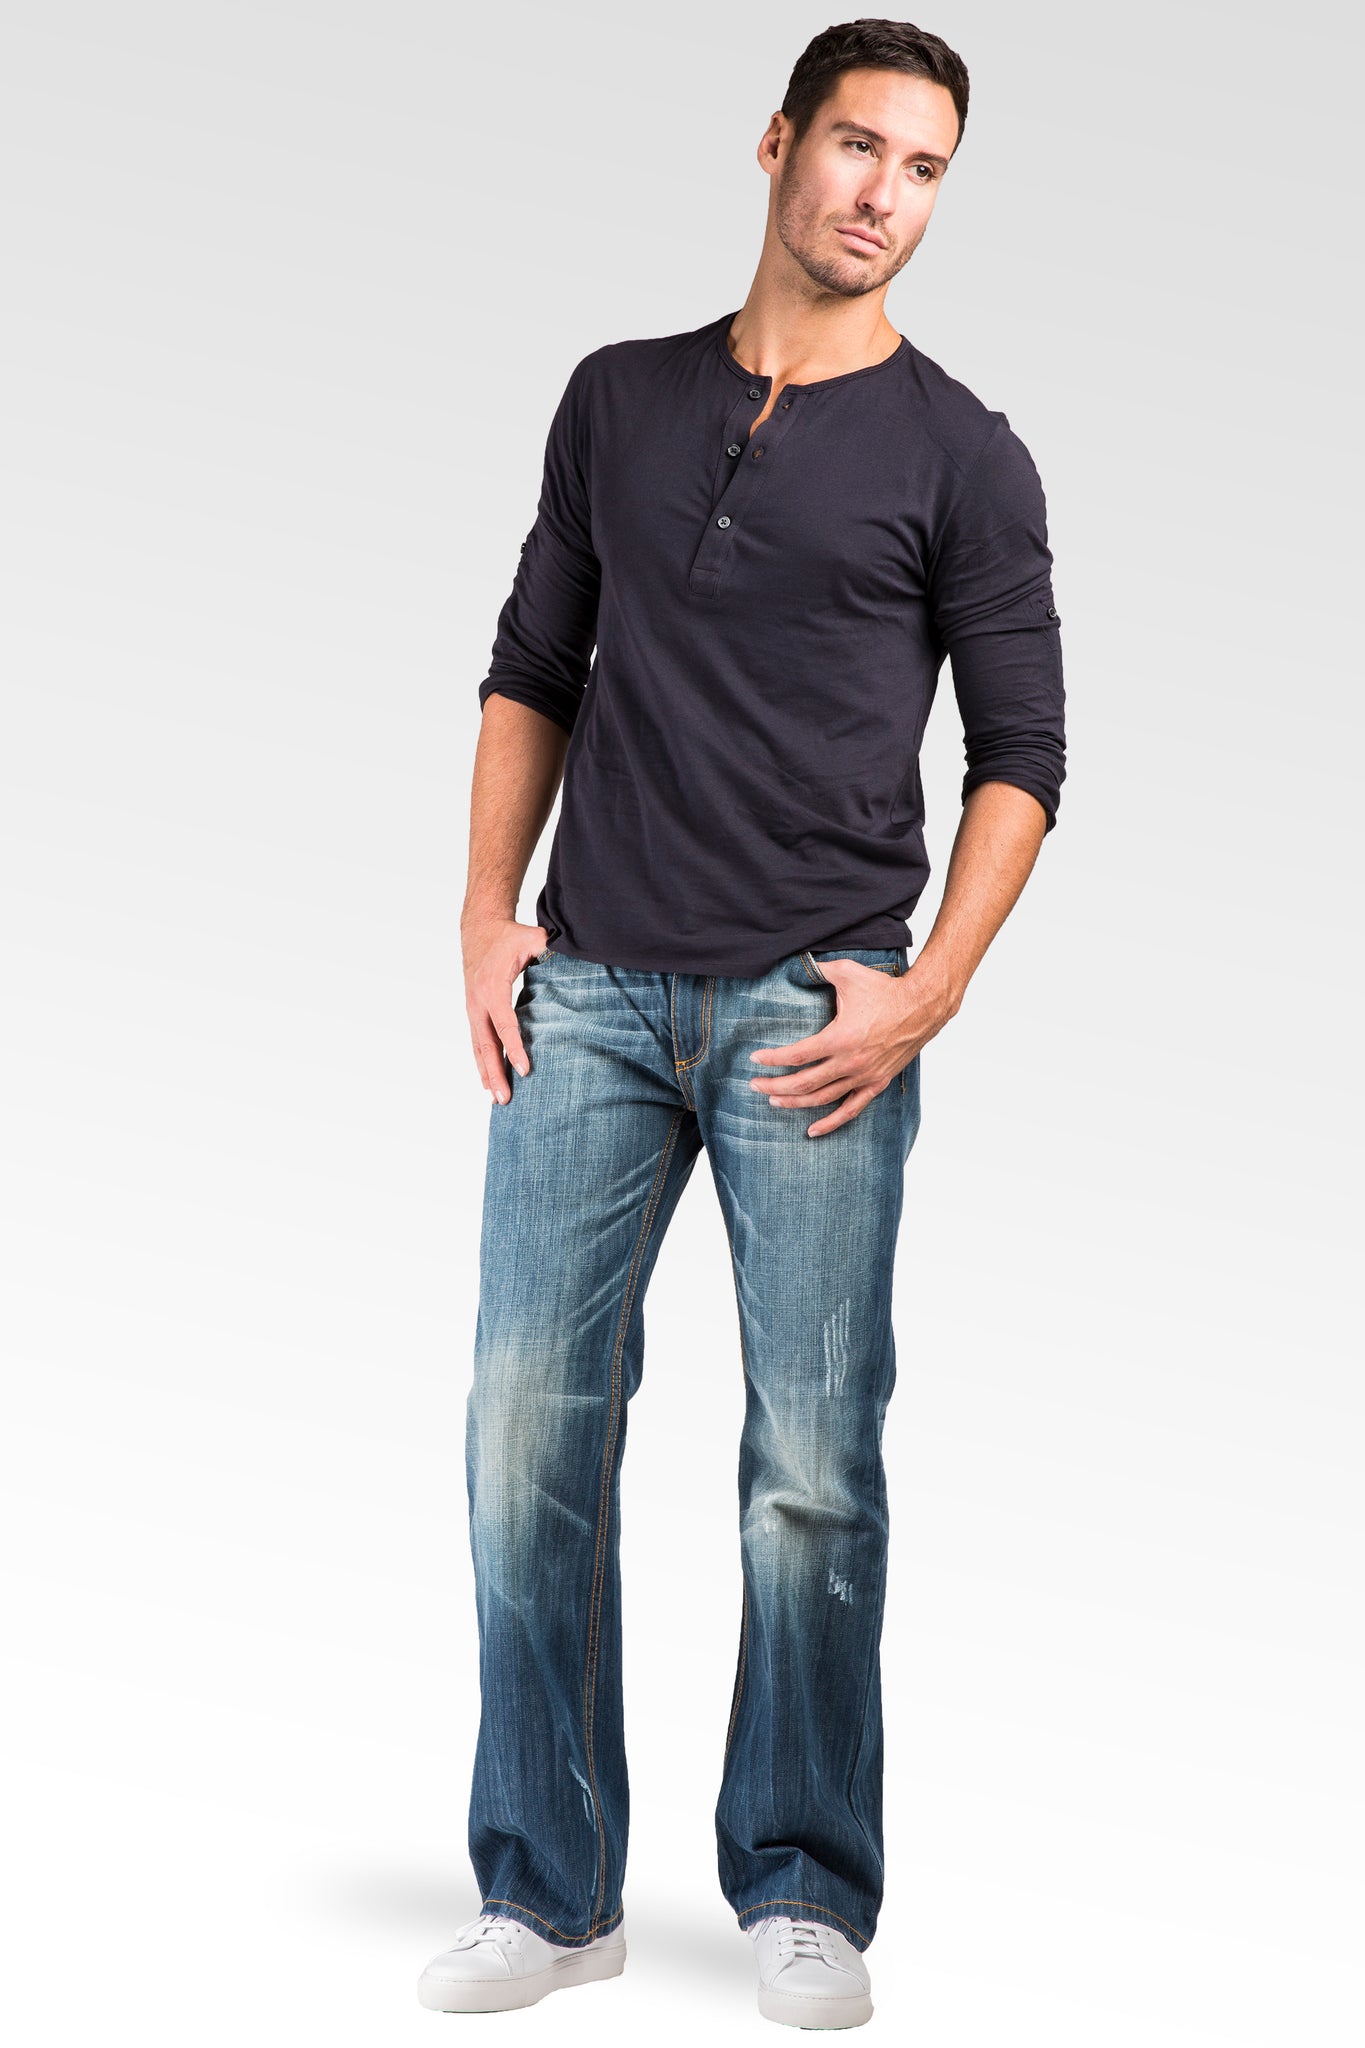 Men's Midrise Relaxed Bootcut Ghost Rider Premium Denim 5 Pocket Jeans Veining & whiskering